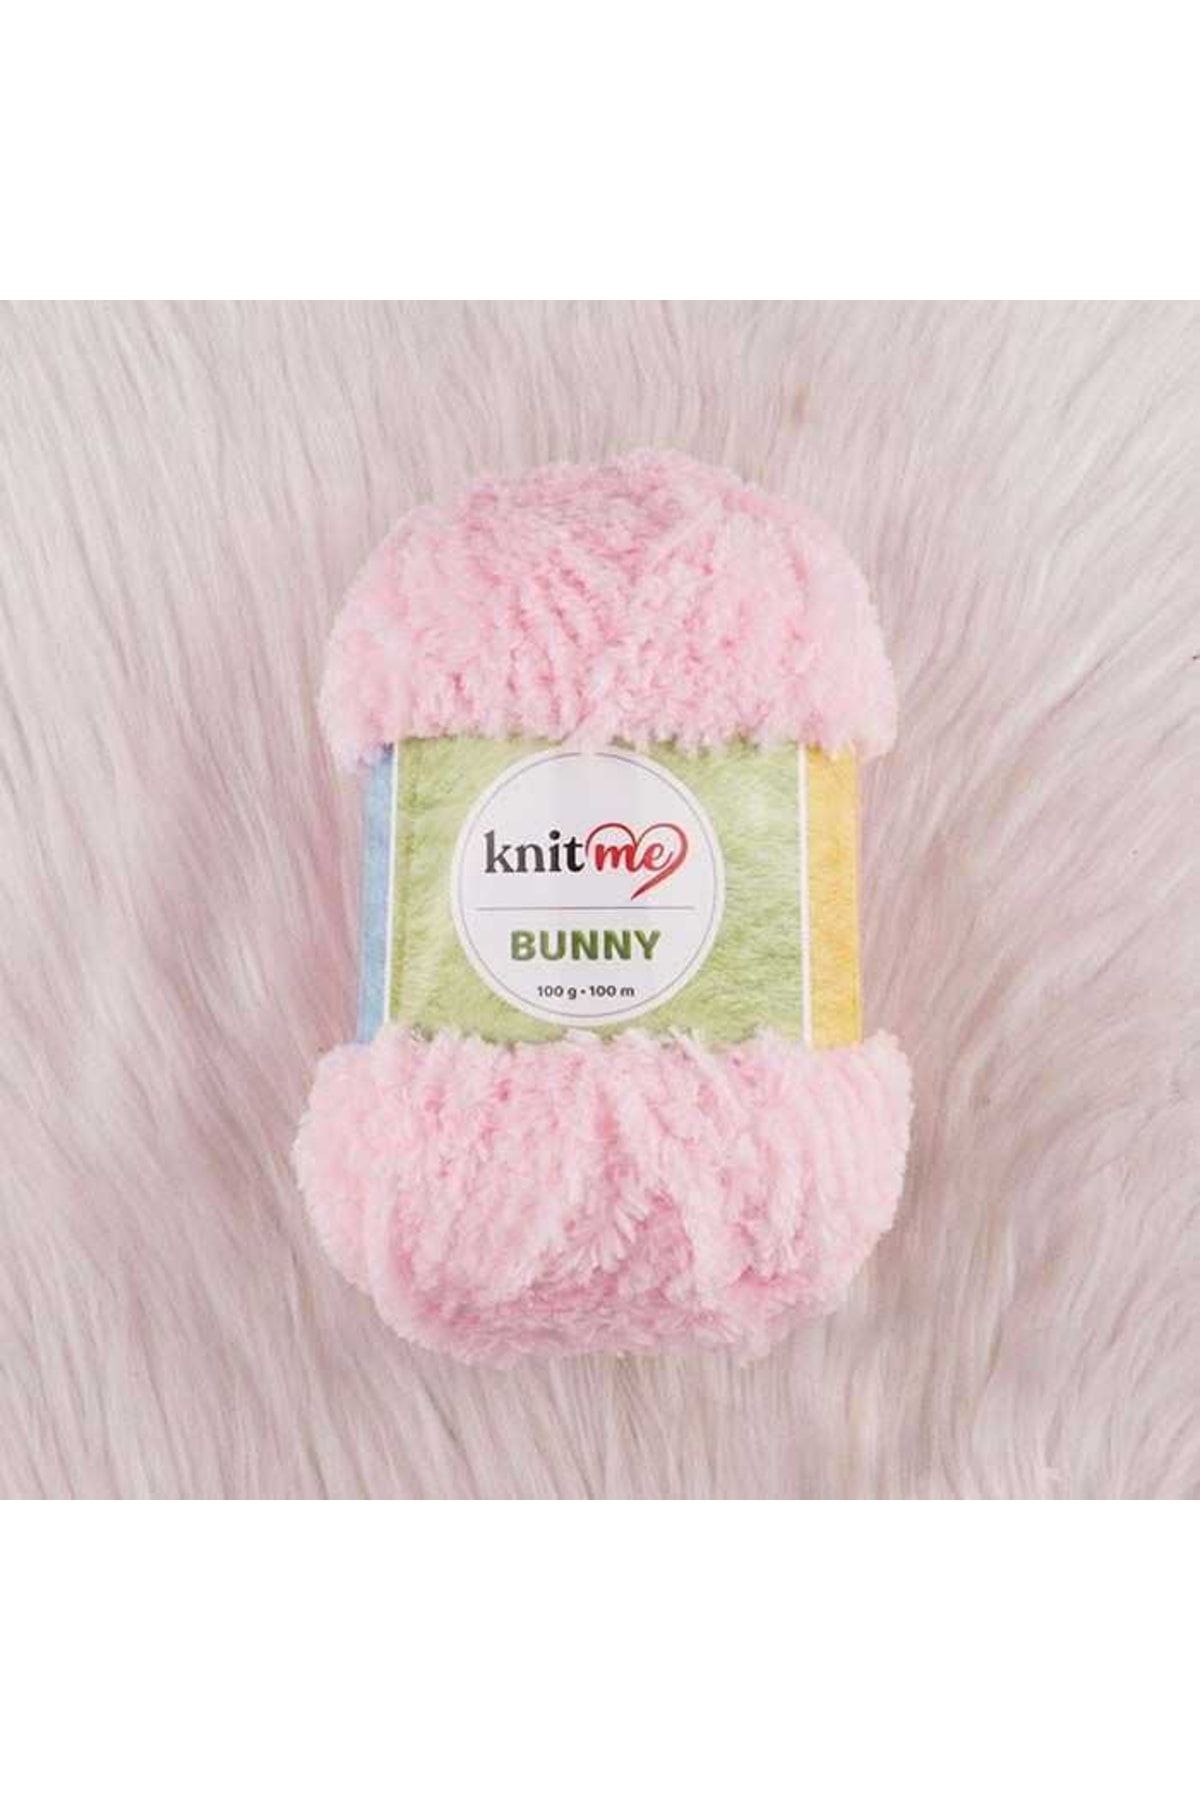 knitme Knit Me Bunny El Örgü Ipi 100 G.100 Mt. 996